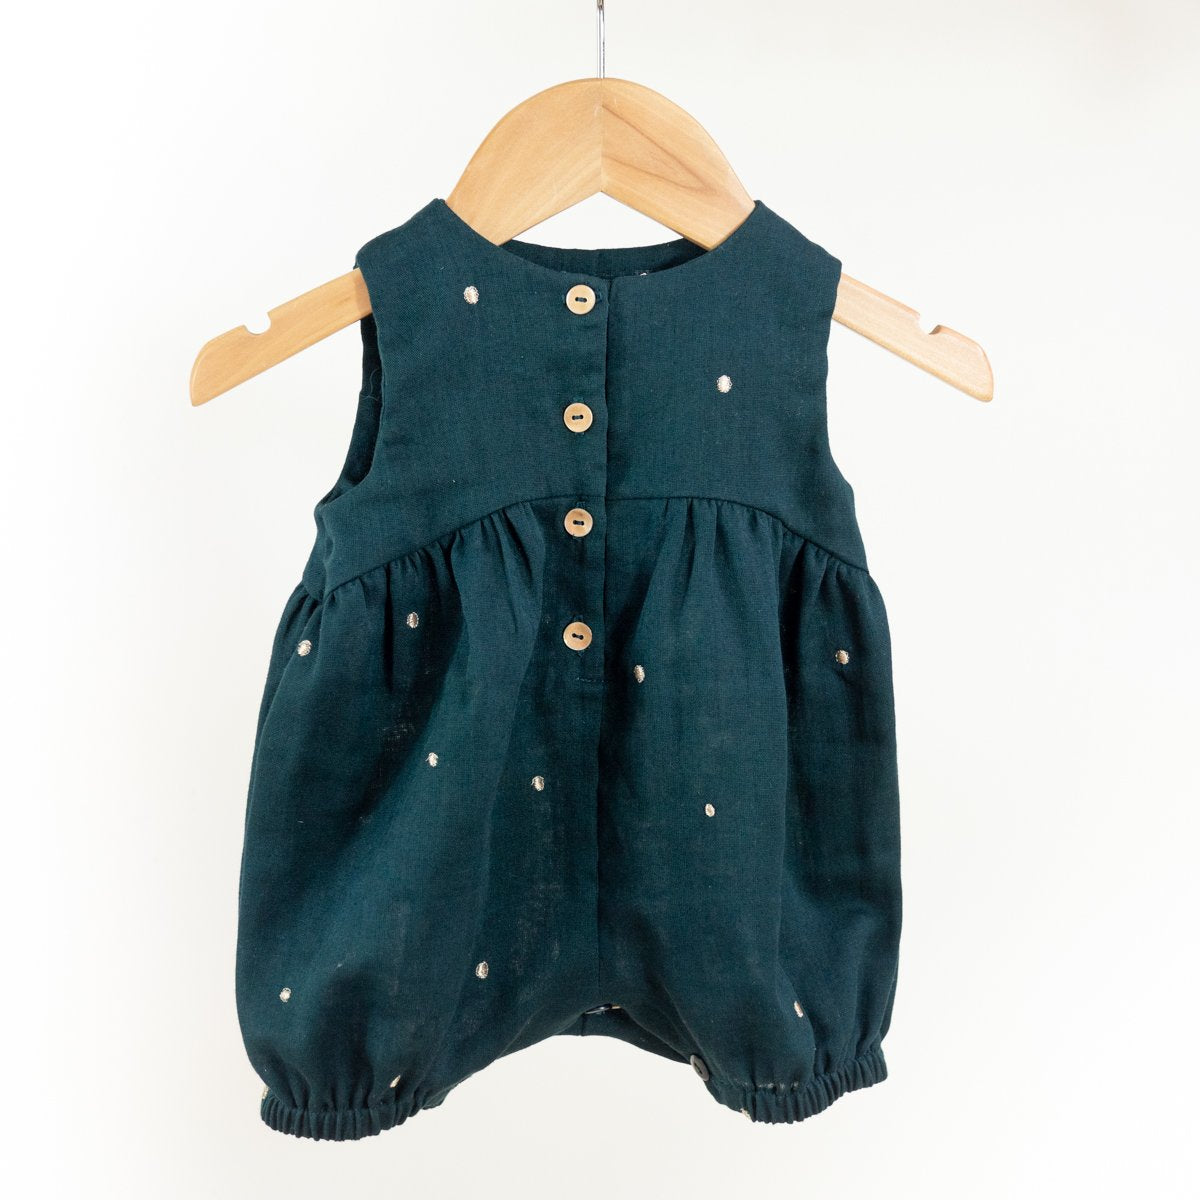 Ikatee - MADRID Jumpsuit/Playsuit - Babies 6m-4Y - Paper Sewing Pattern